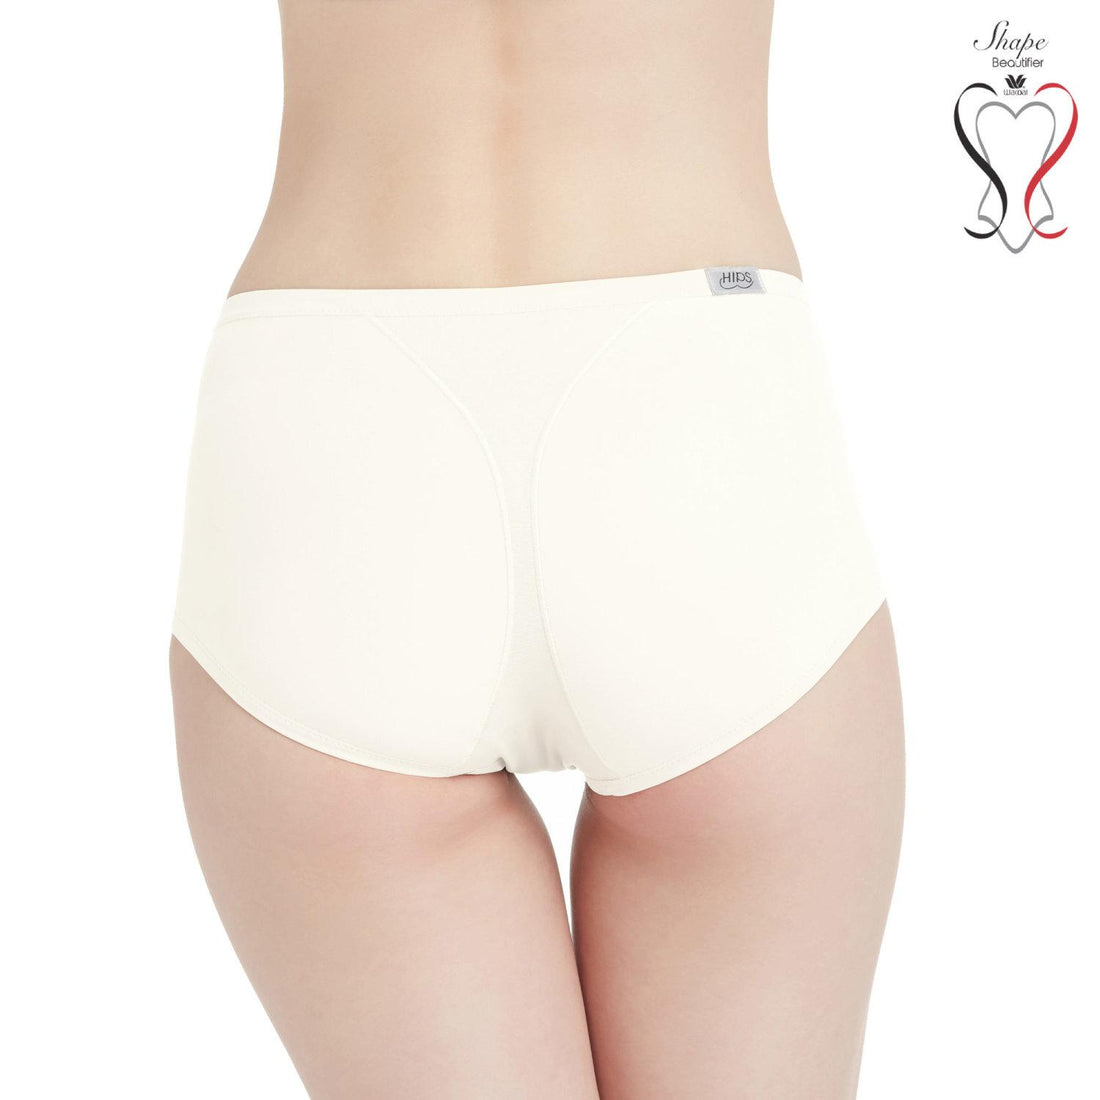 Wacoal Shapewear Hips กางเกงยกสะโพก และก้นกลมสวย รุ่น WY1129 สีครีม (CR)